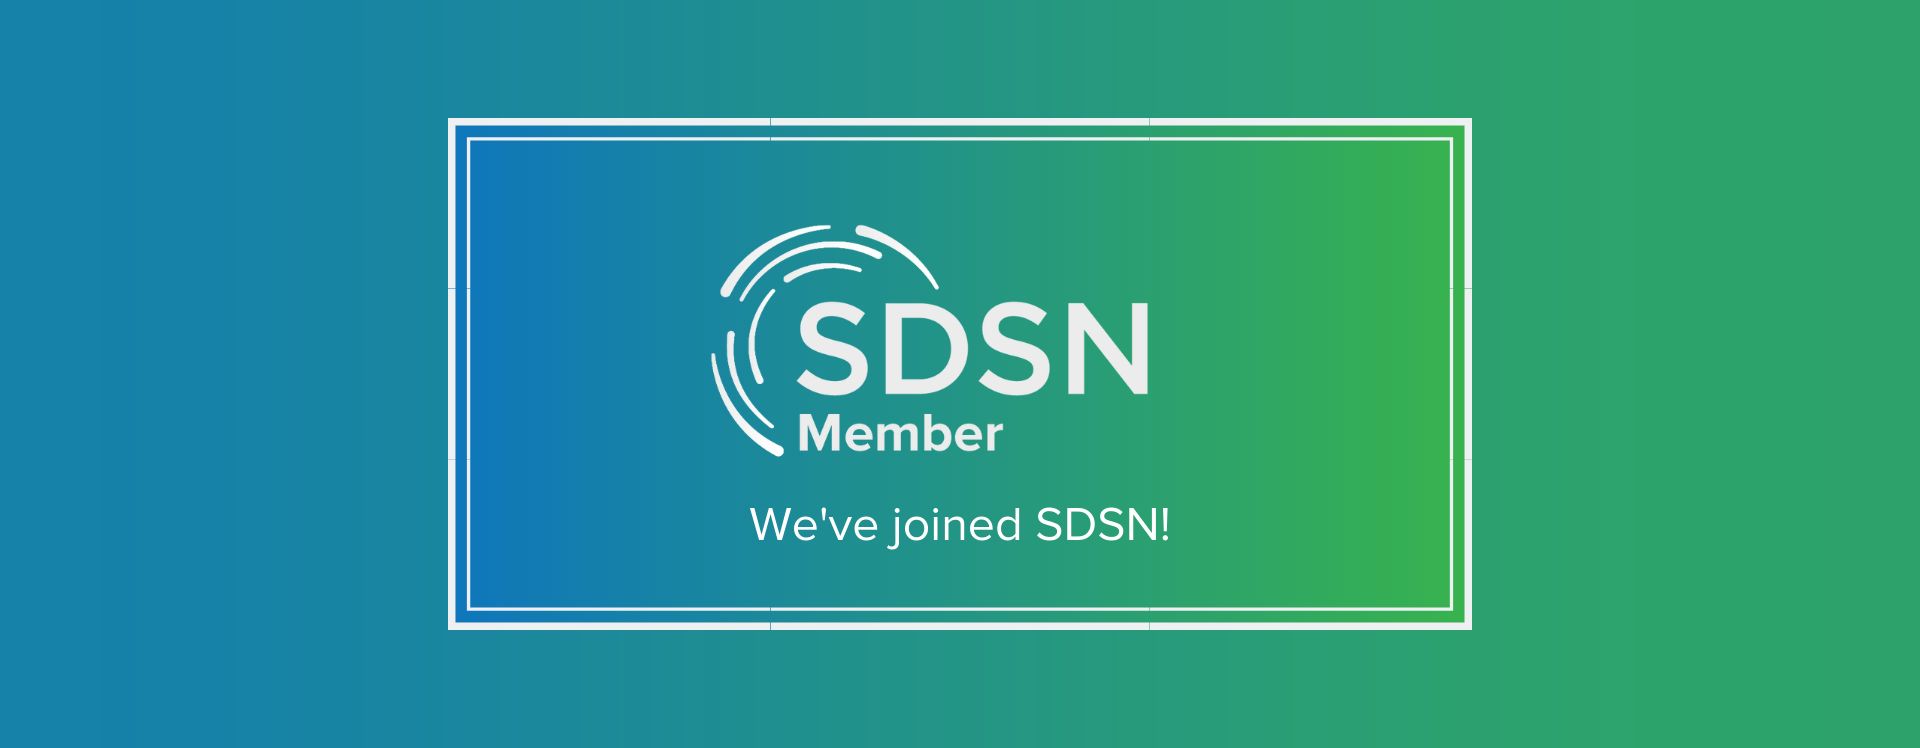 IIM Visakhapatnam now a member of SDSN